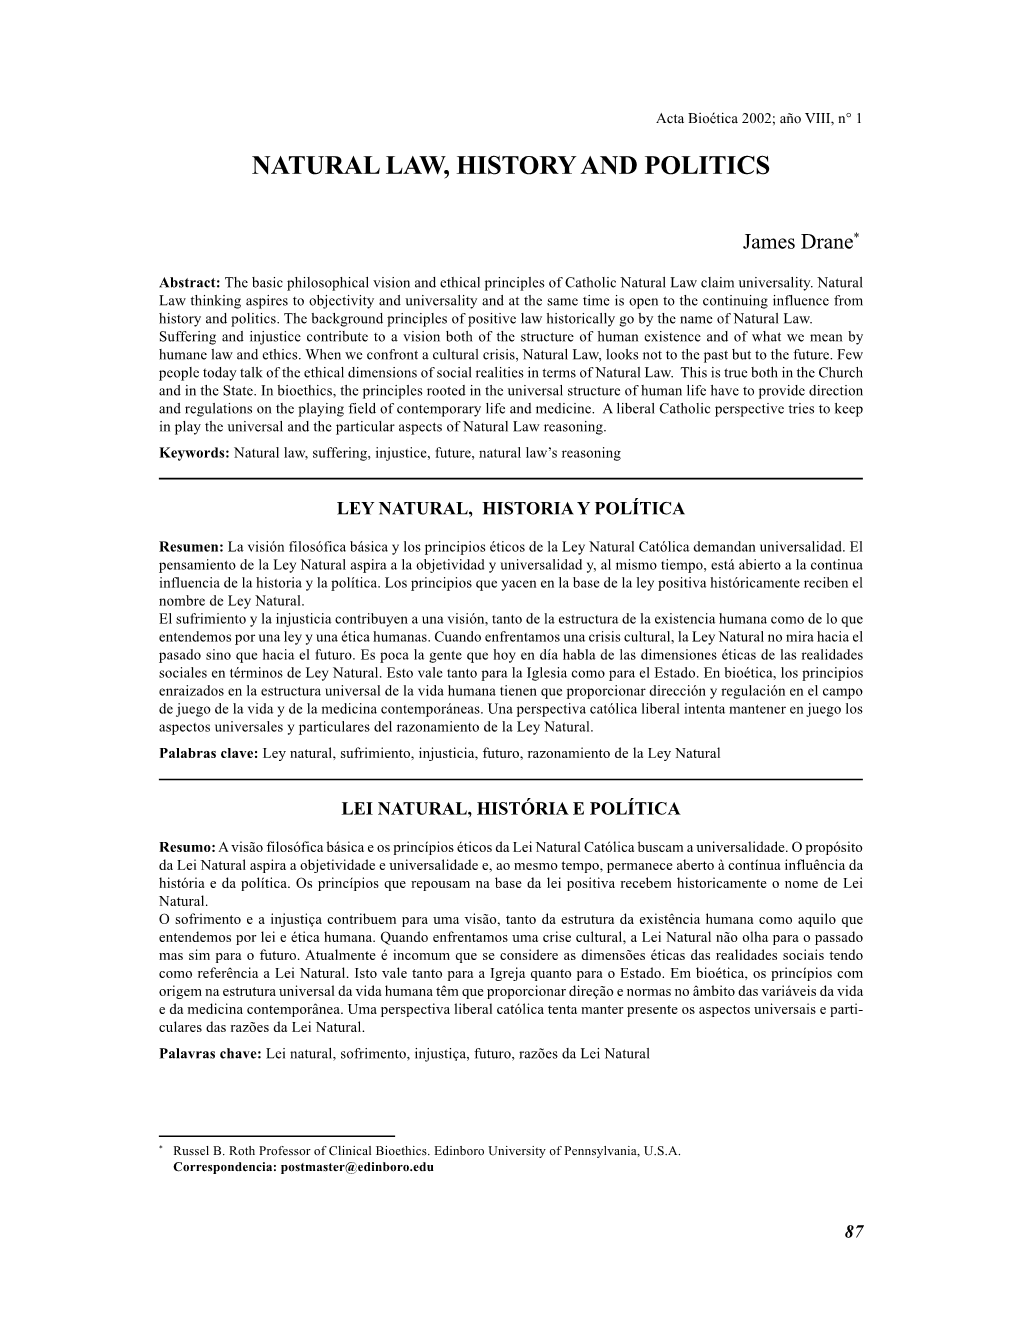 Natural Law, History and Politics